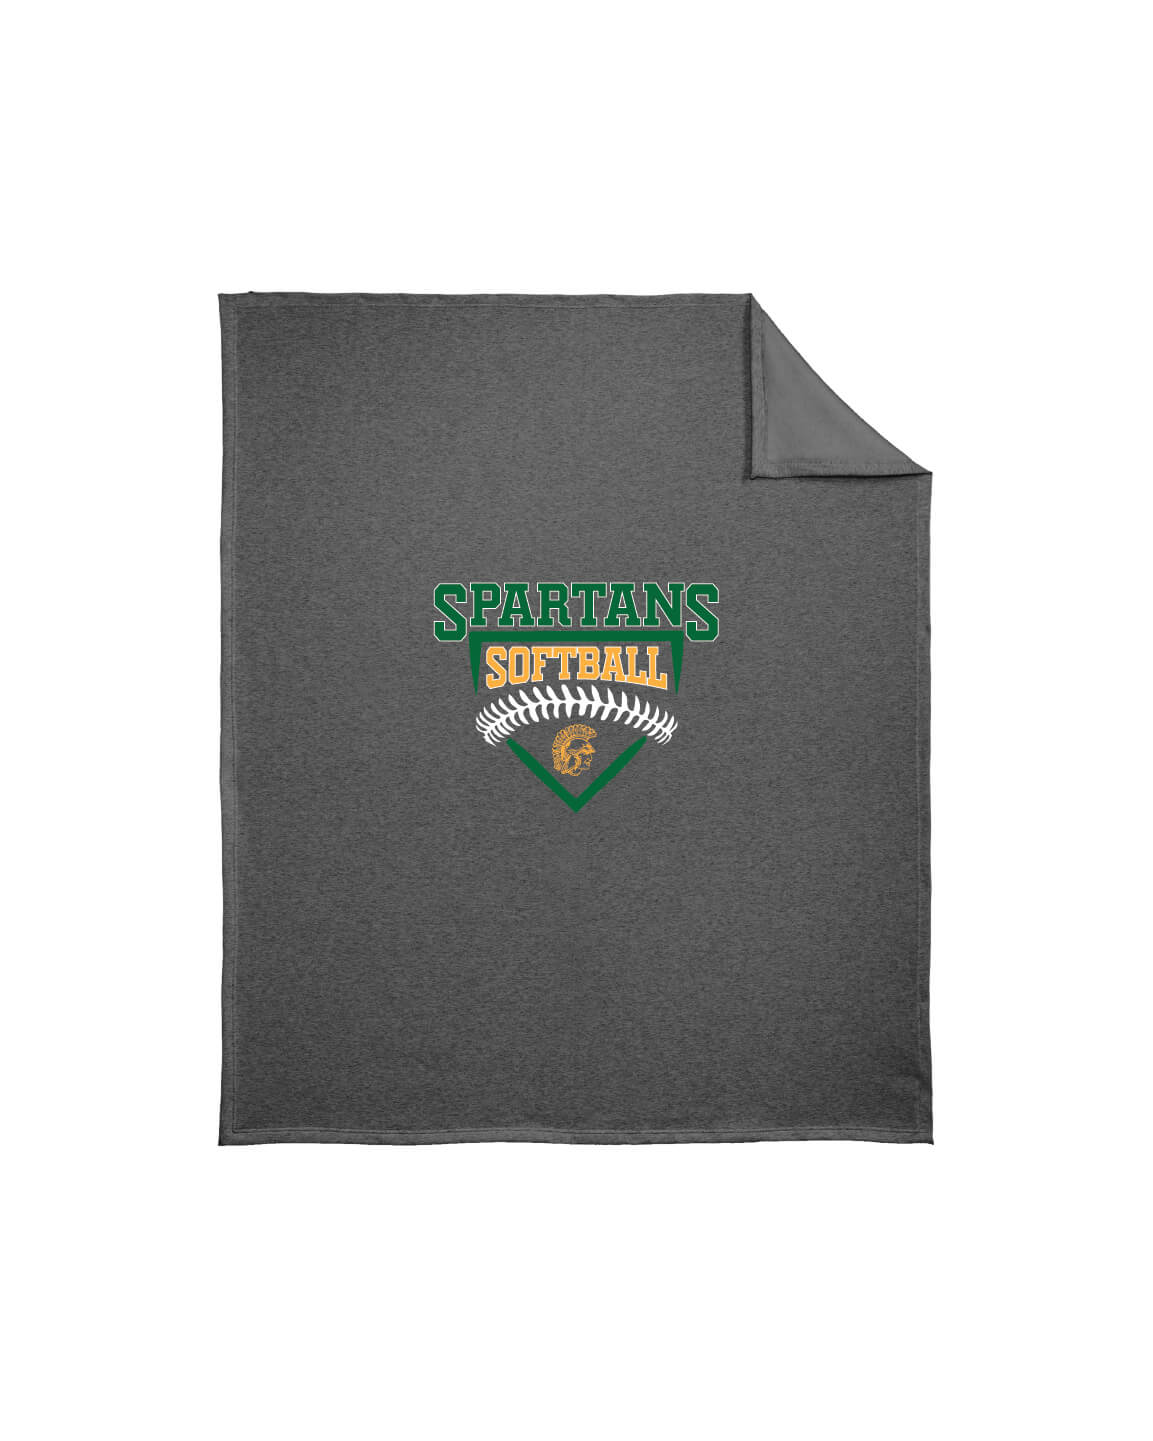 Spartans Softball Sweatshirt Blanket gray